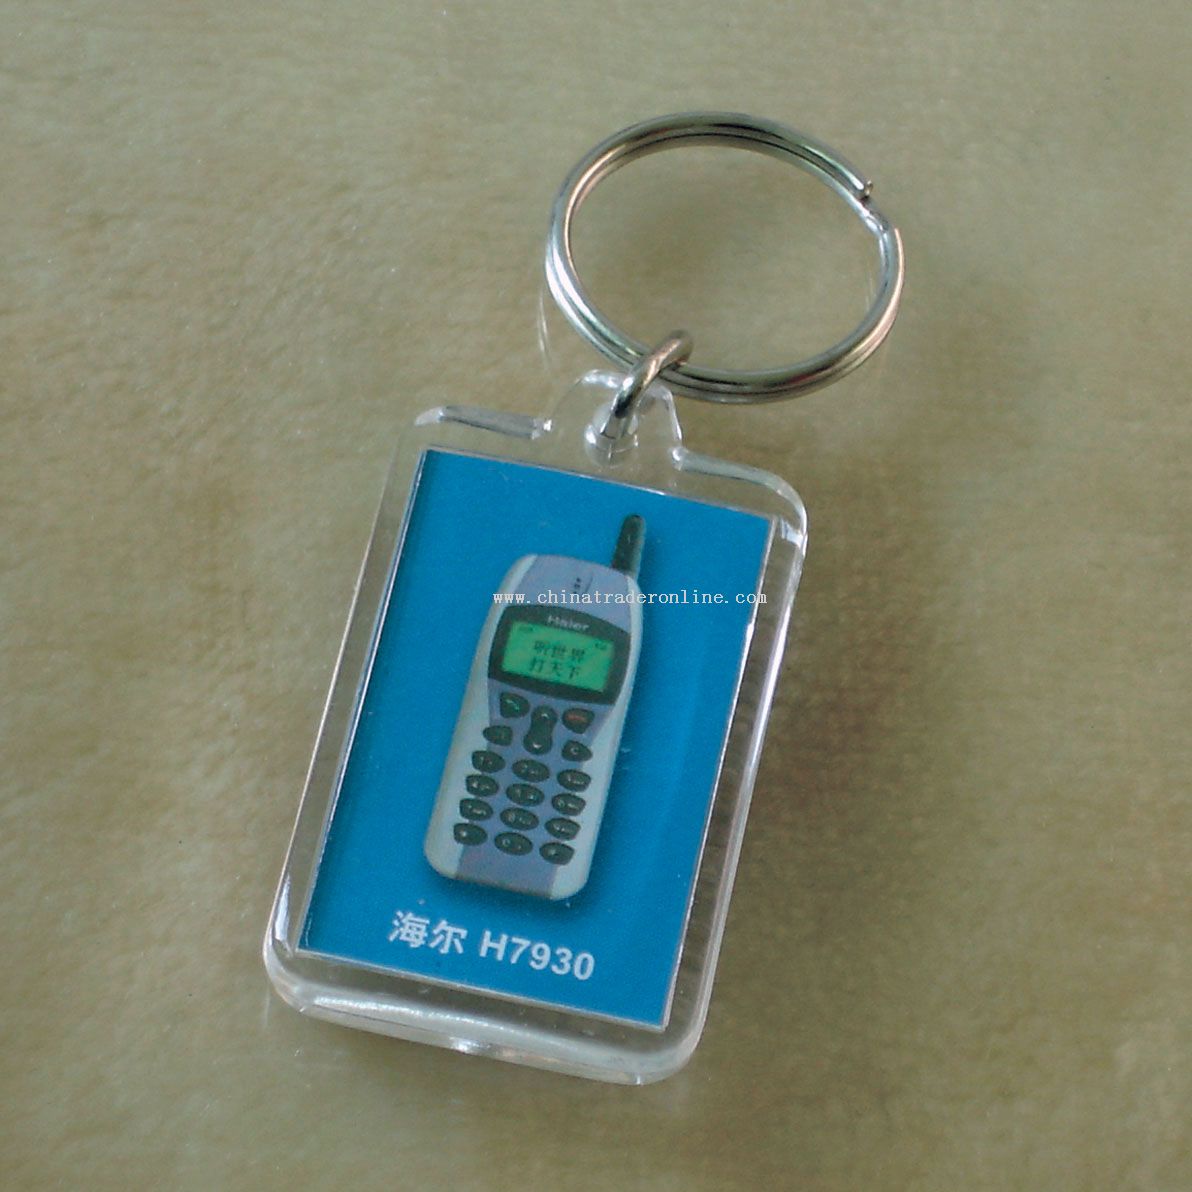 Acrylic ultrasonic keychain from China